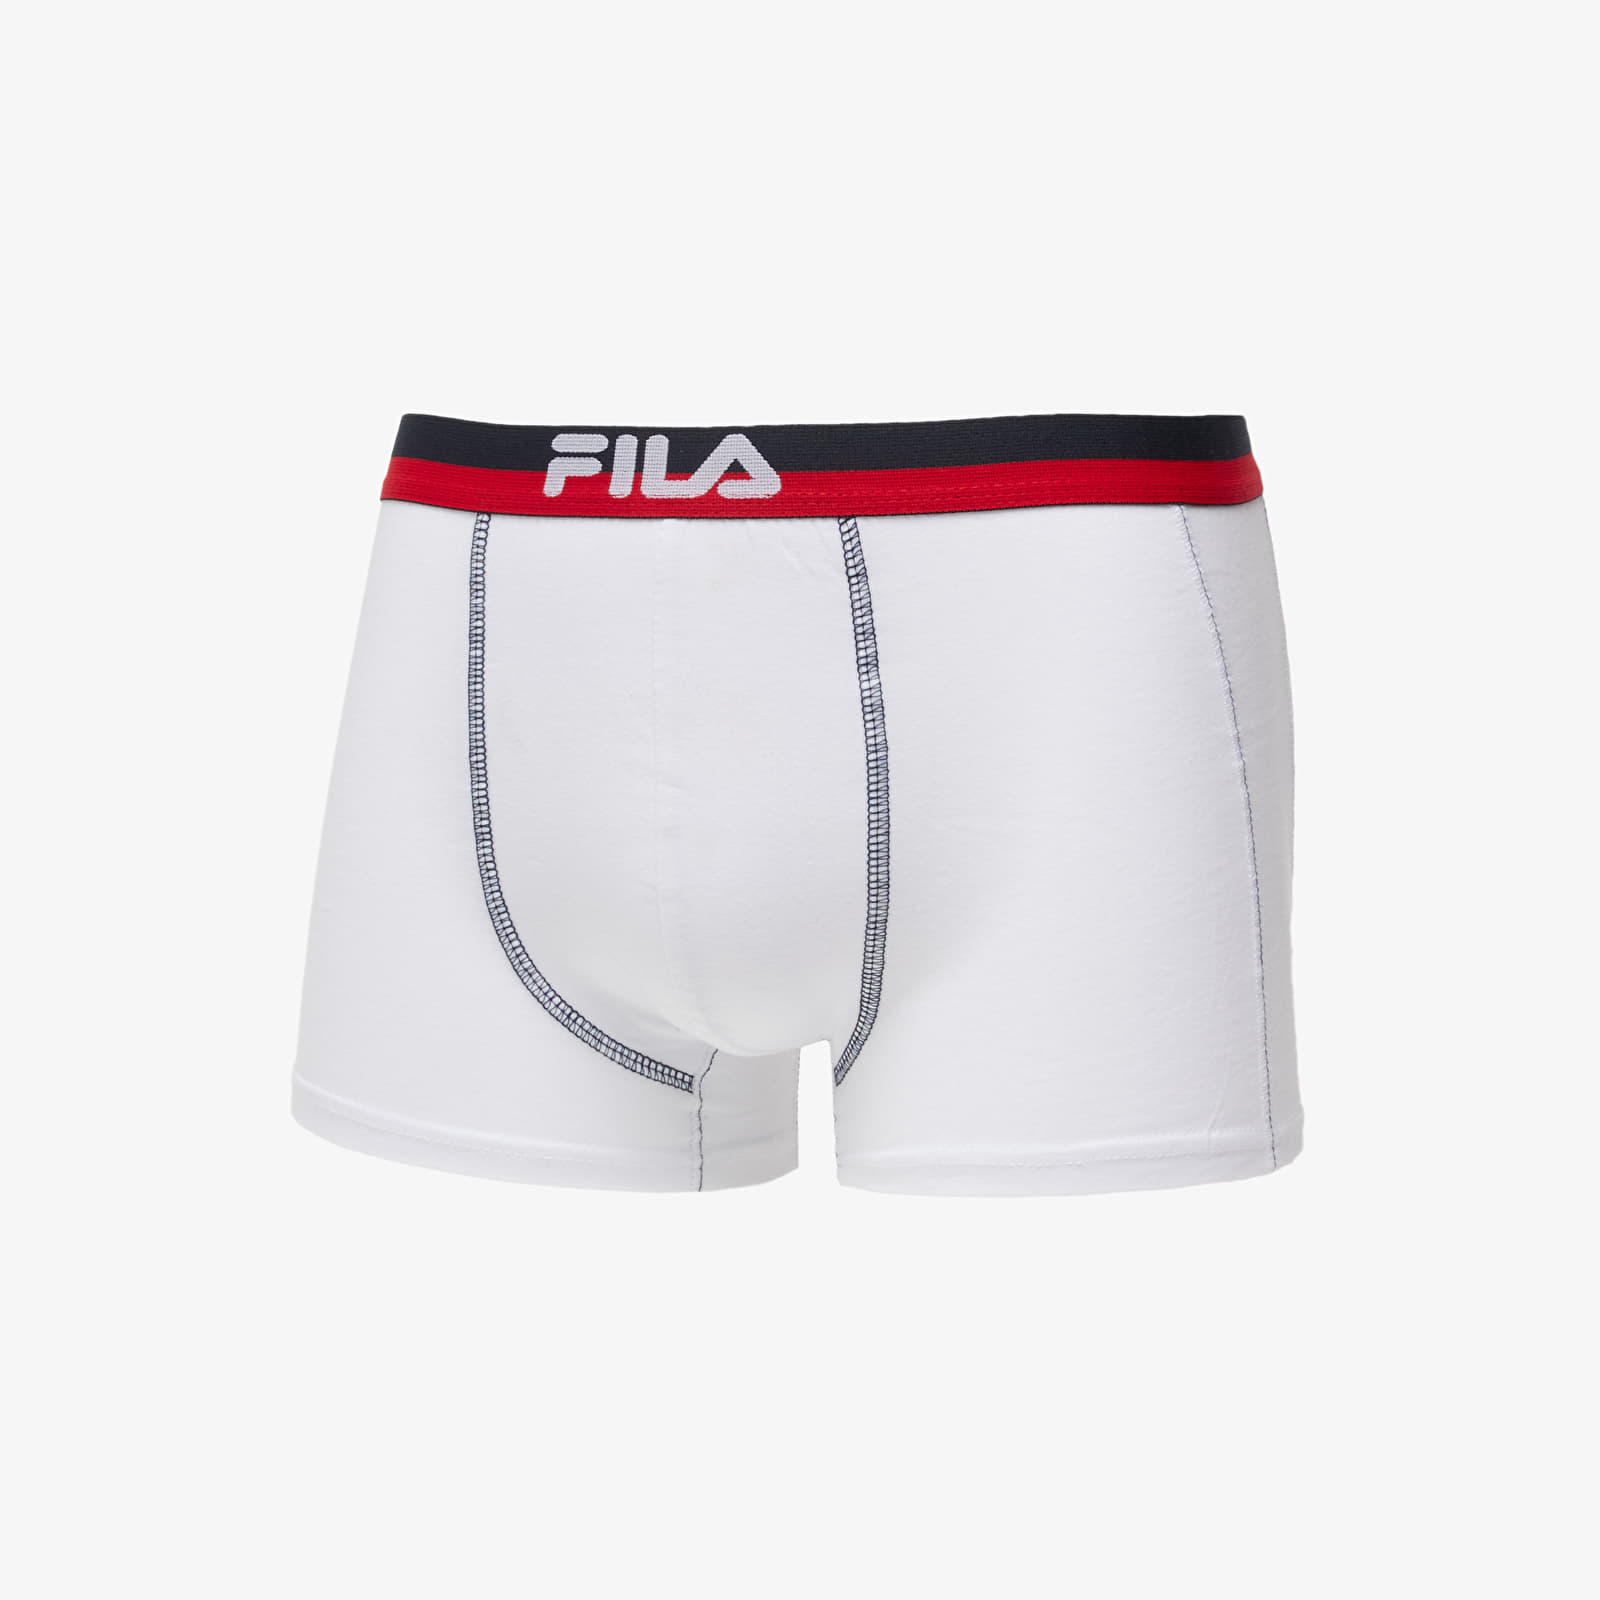 Men's underwear FILA 2 Pack Boxers White